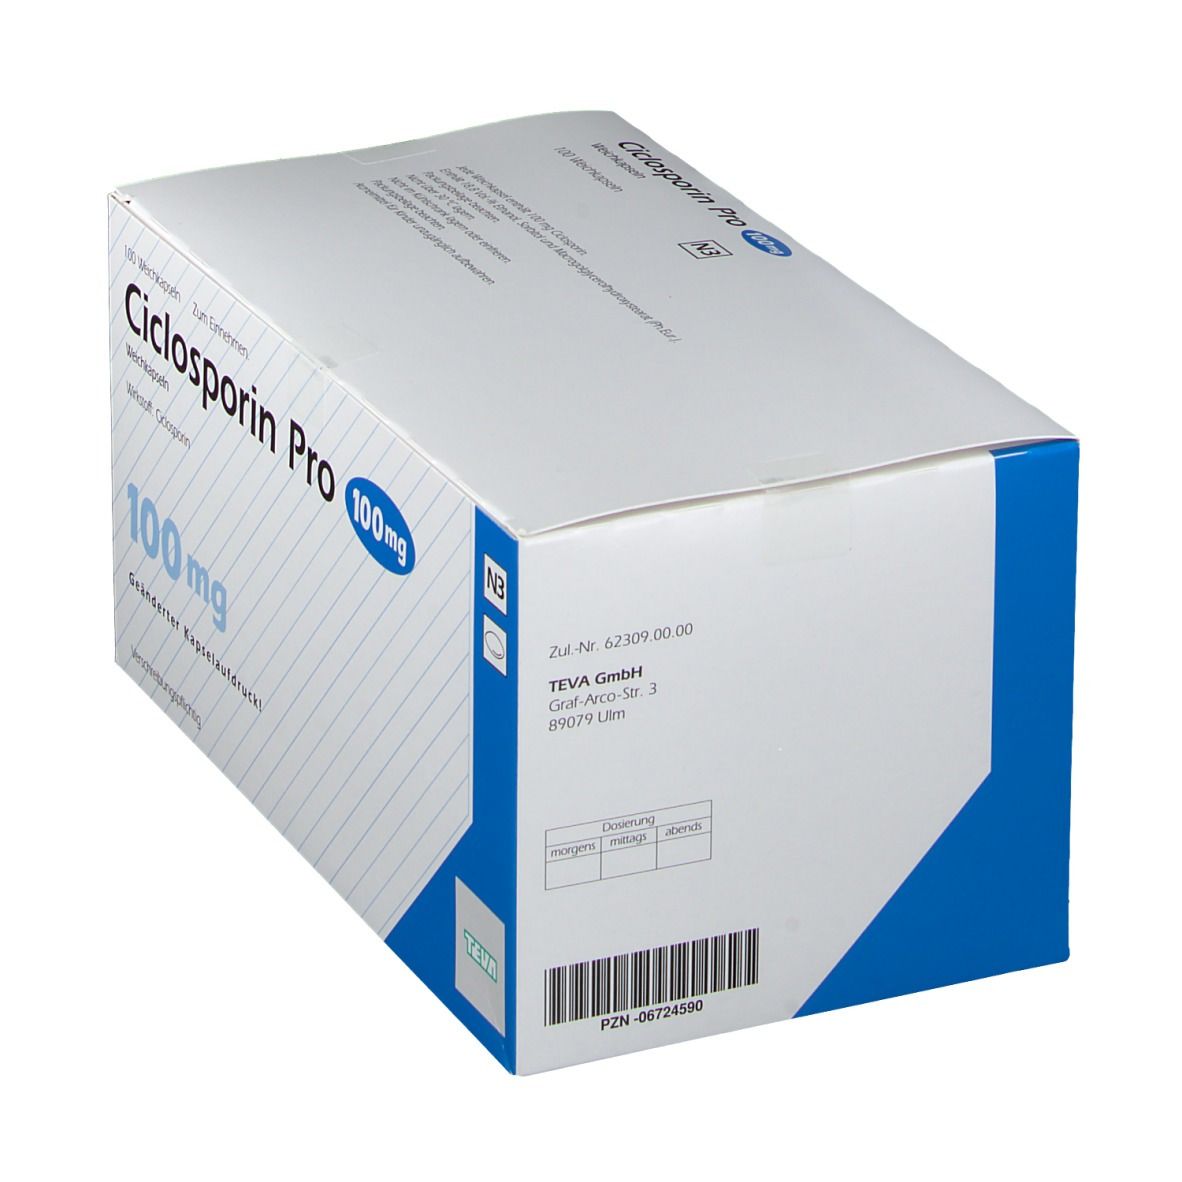 Ciclosporin Pro 100 mg